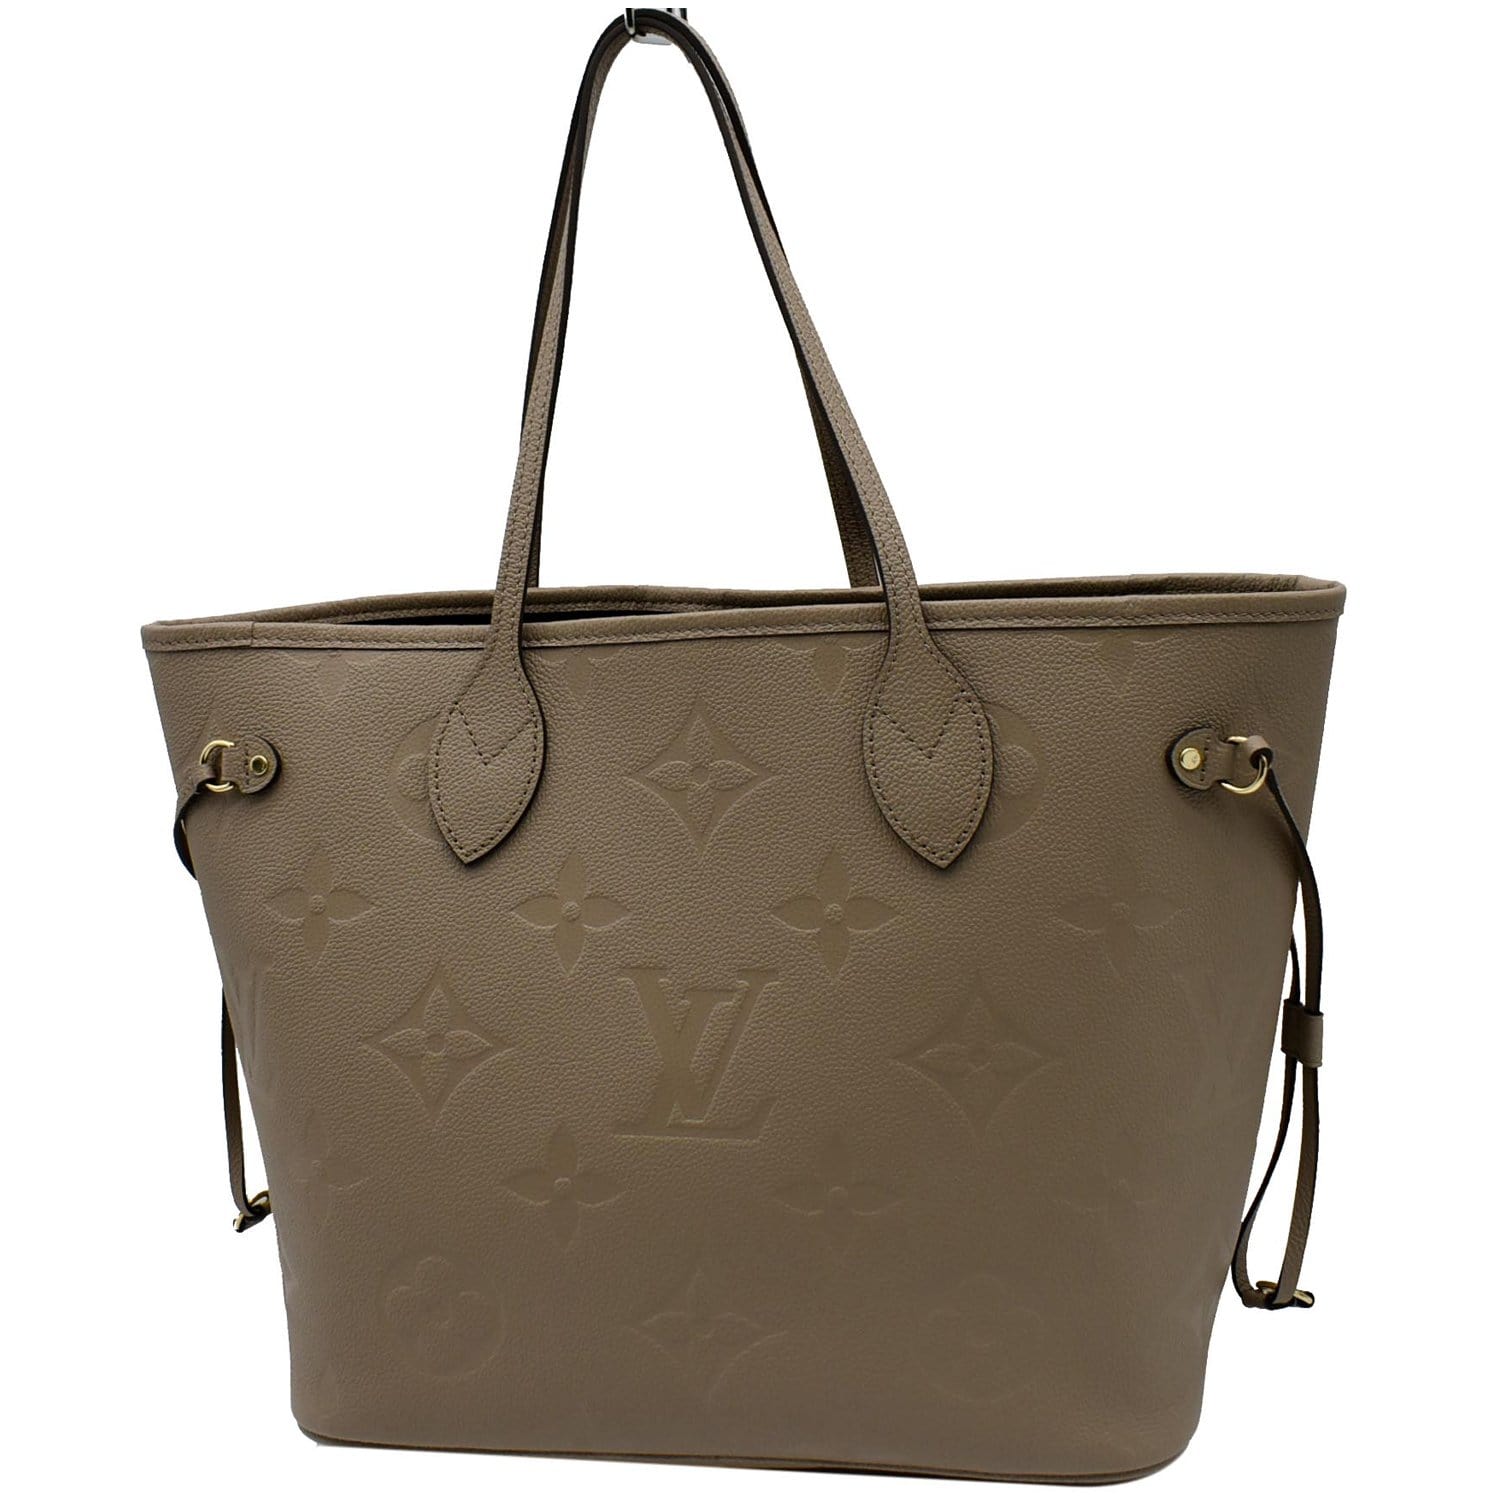 Louis Vuitton - Neverfull mm - Monogram Leather - Black / Beige - Women - Handbag - Luxury